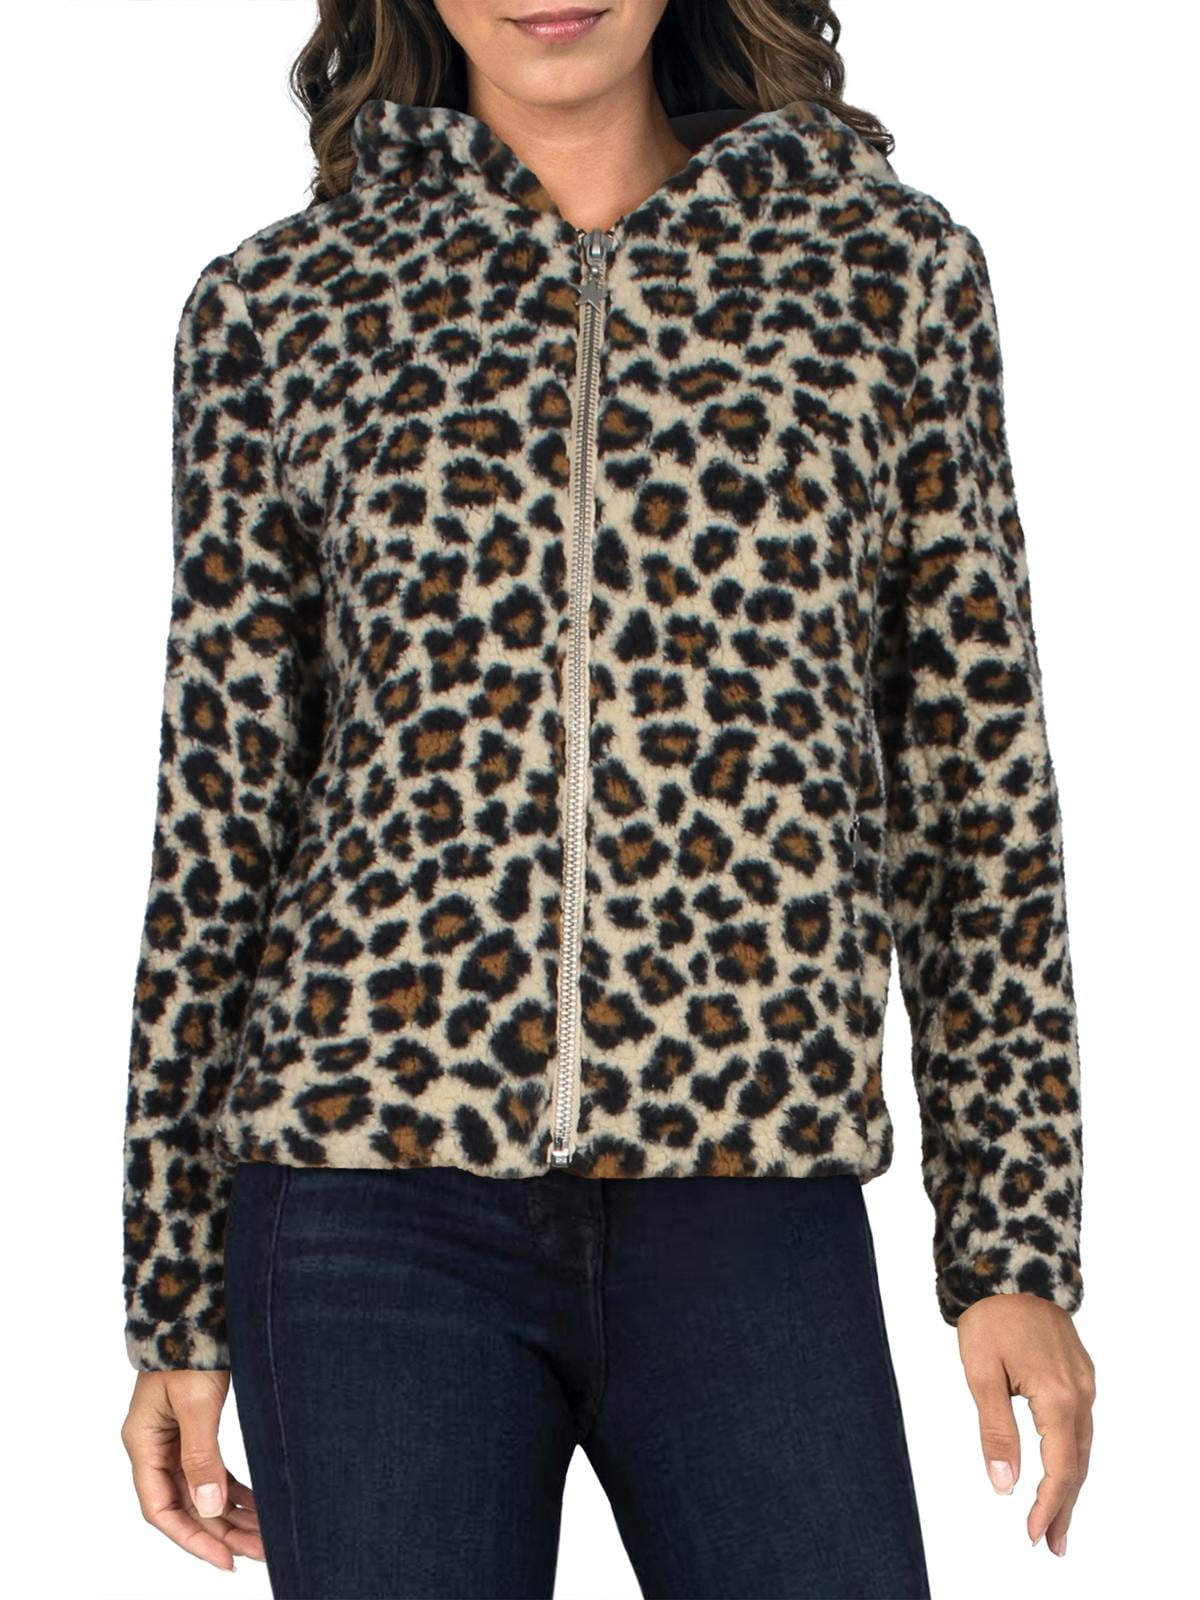 Chaser Womens Faux Fur Leopard Coat - Walmart.com